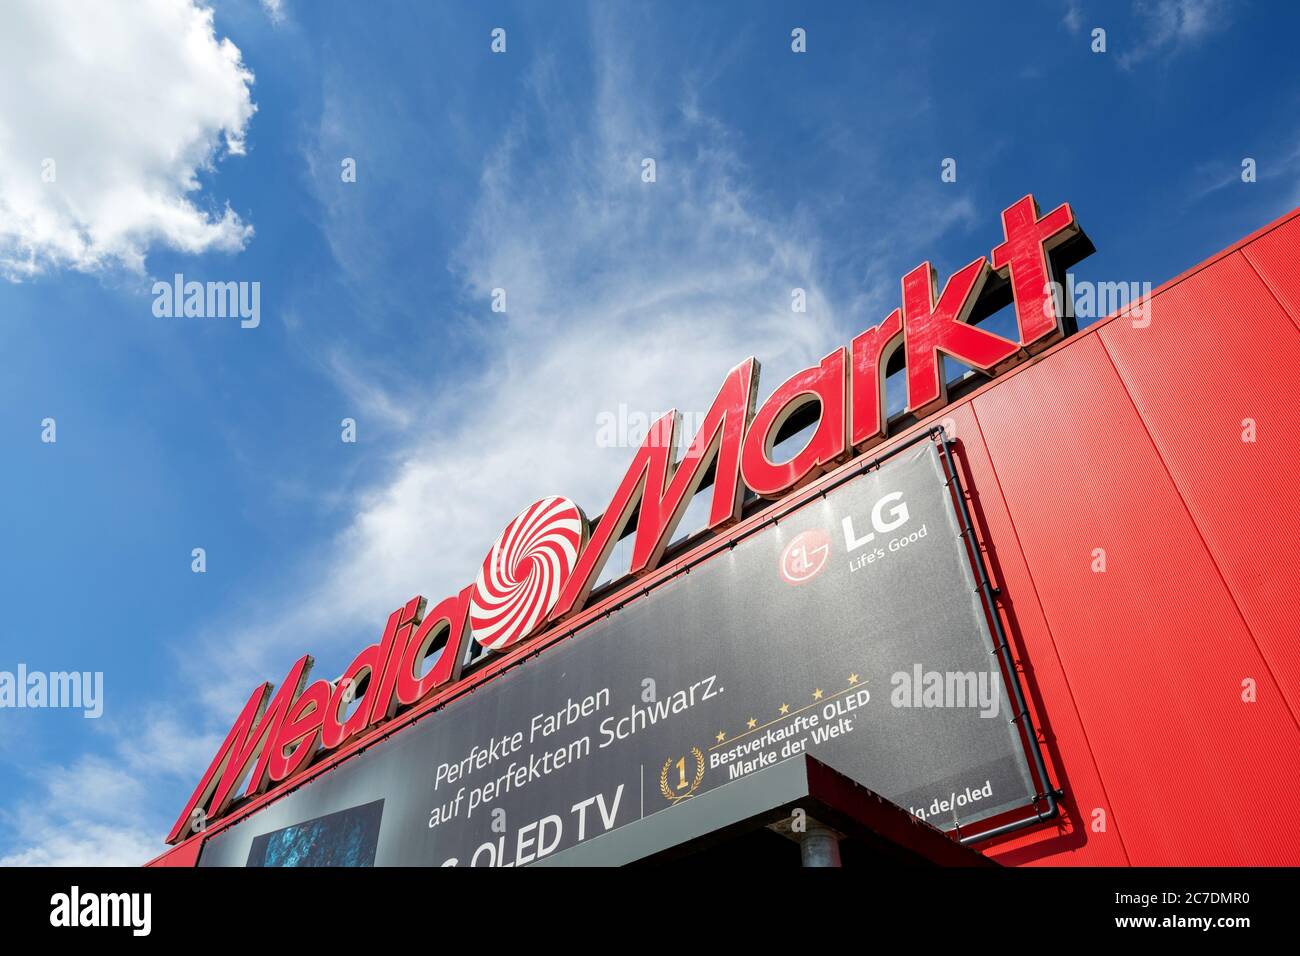 Media Markt logo Stock Photo - Alamy